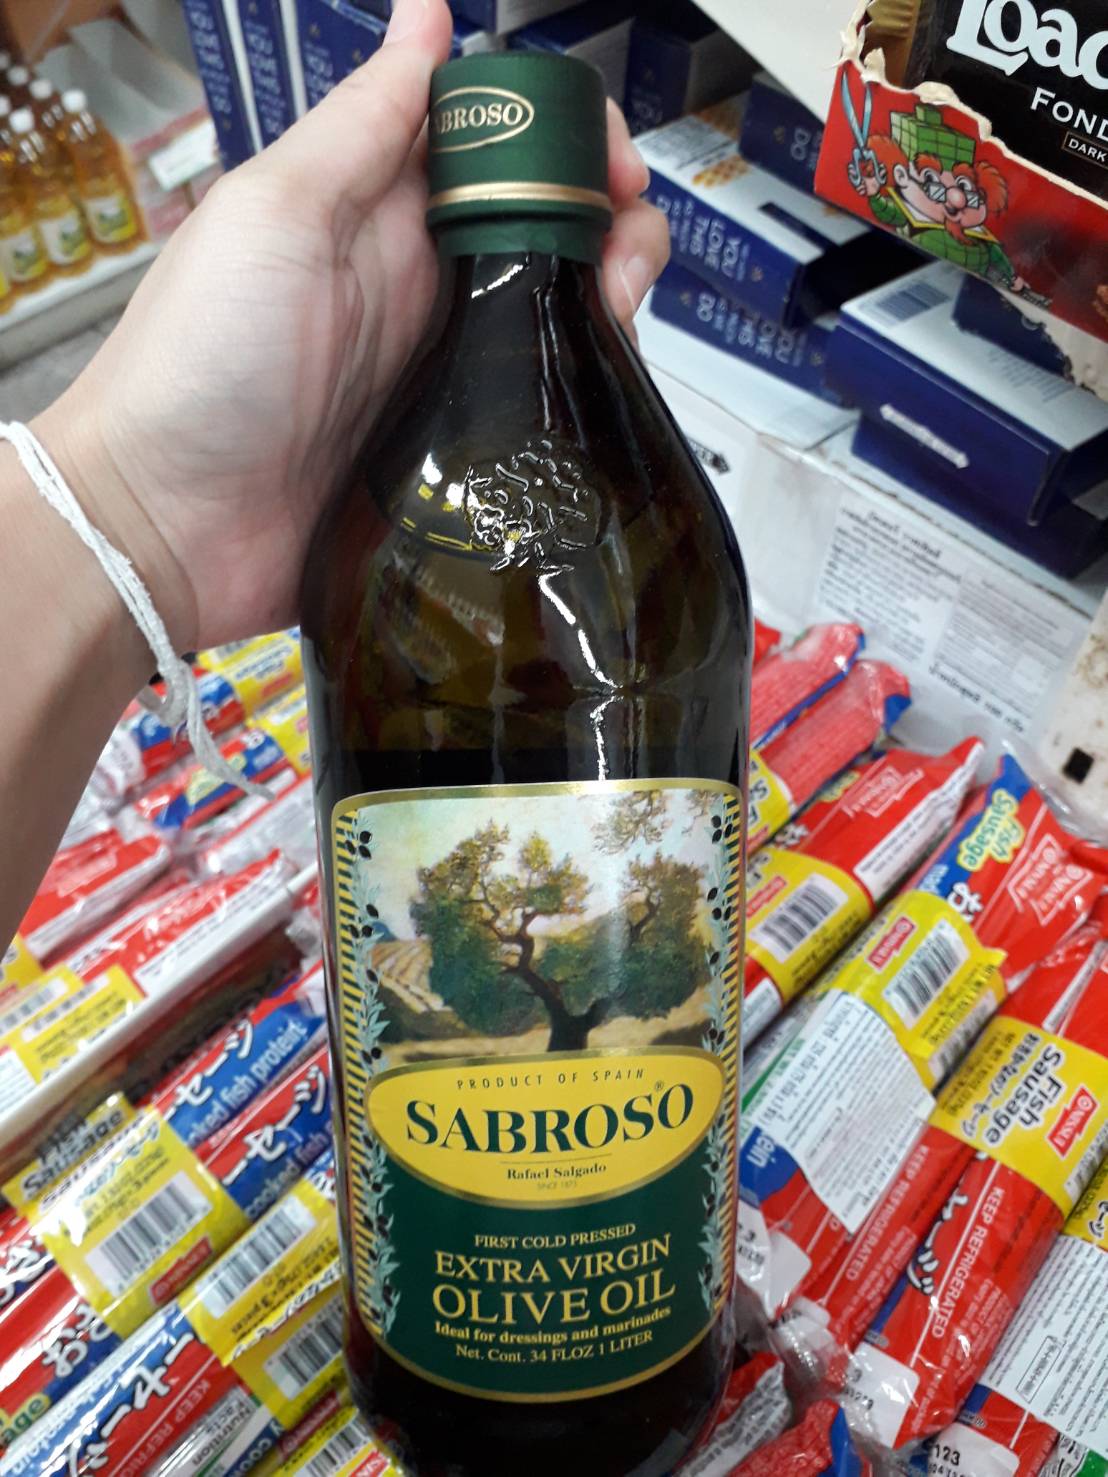 Sabroso Extra Virgin Olive Oil /ซาโบรโซ เอ็กซ์ตร้า เวอร์จิ้น โอลีฟ ออยล์ (น้ำมันมะกอกธรรมชาติไม่ผ่านกรรมวิธี 100%) ขนาด 1000มล.